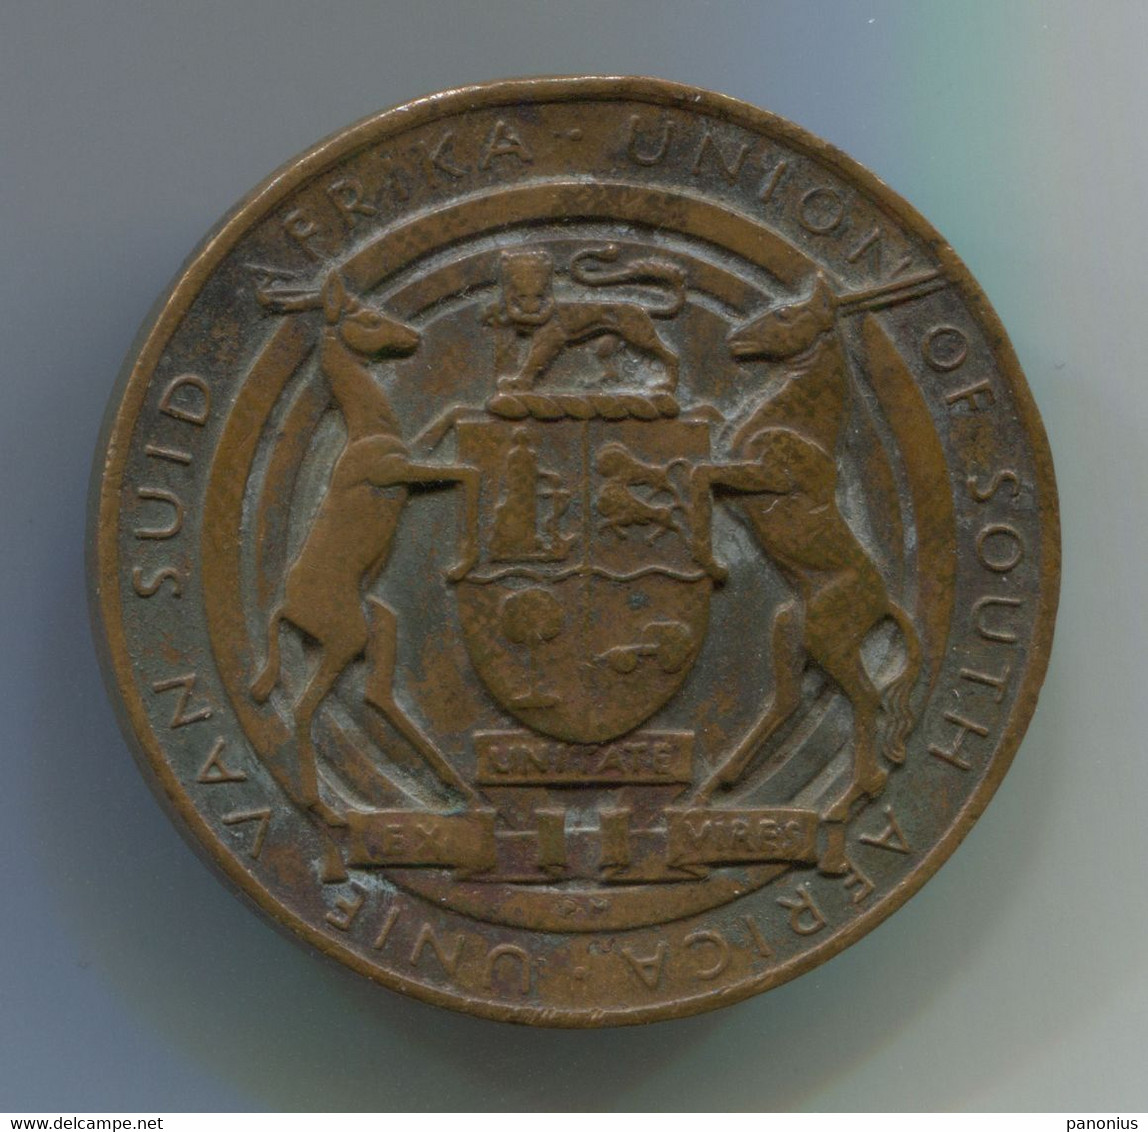 SOUTH AFRICA - 6.5.1935. King George V, Jubilee Bronze Medal, Diameter: 30mm - Adel